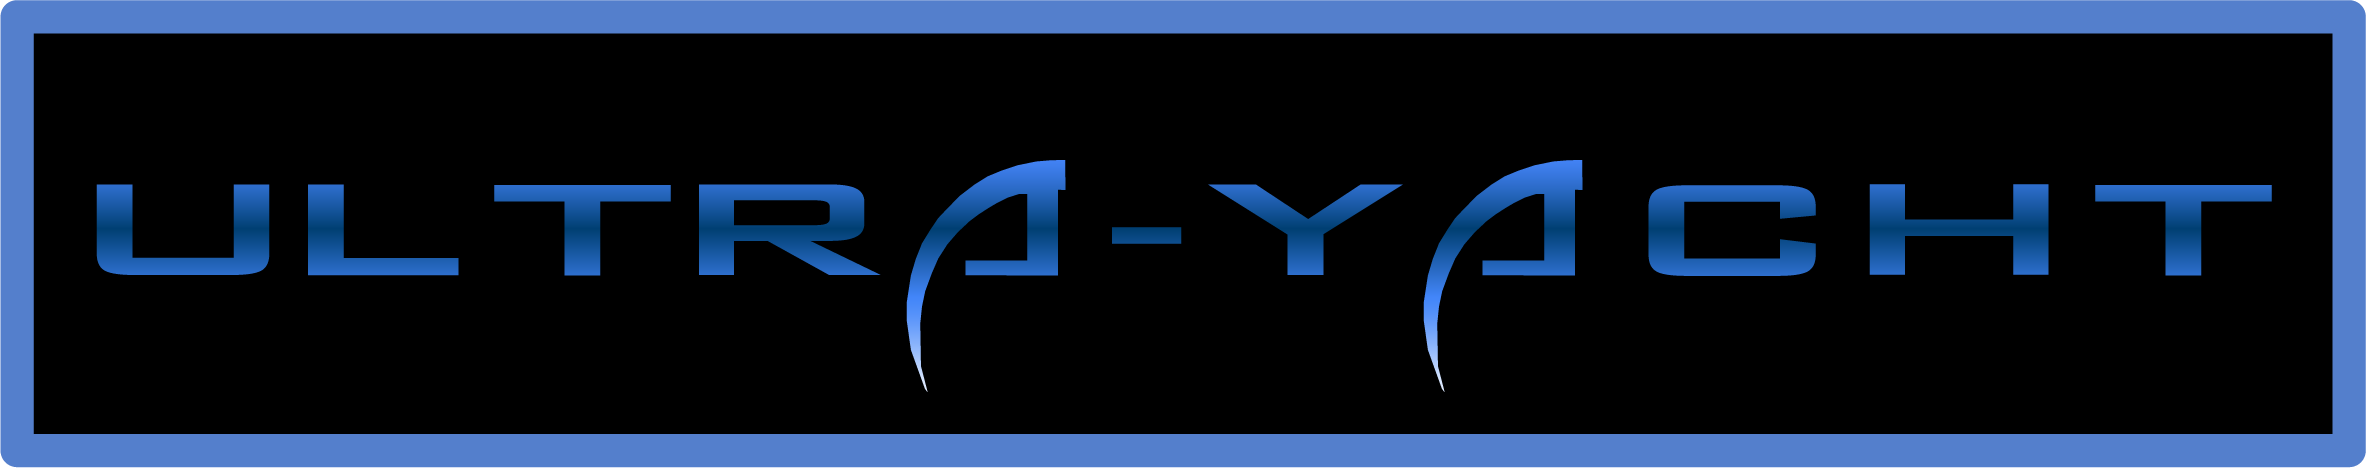 Ultra-Yacht Logo_Final